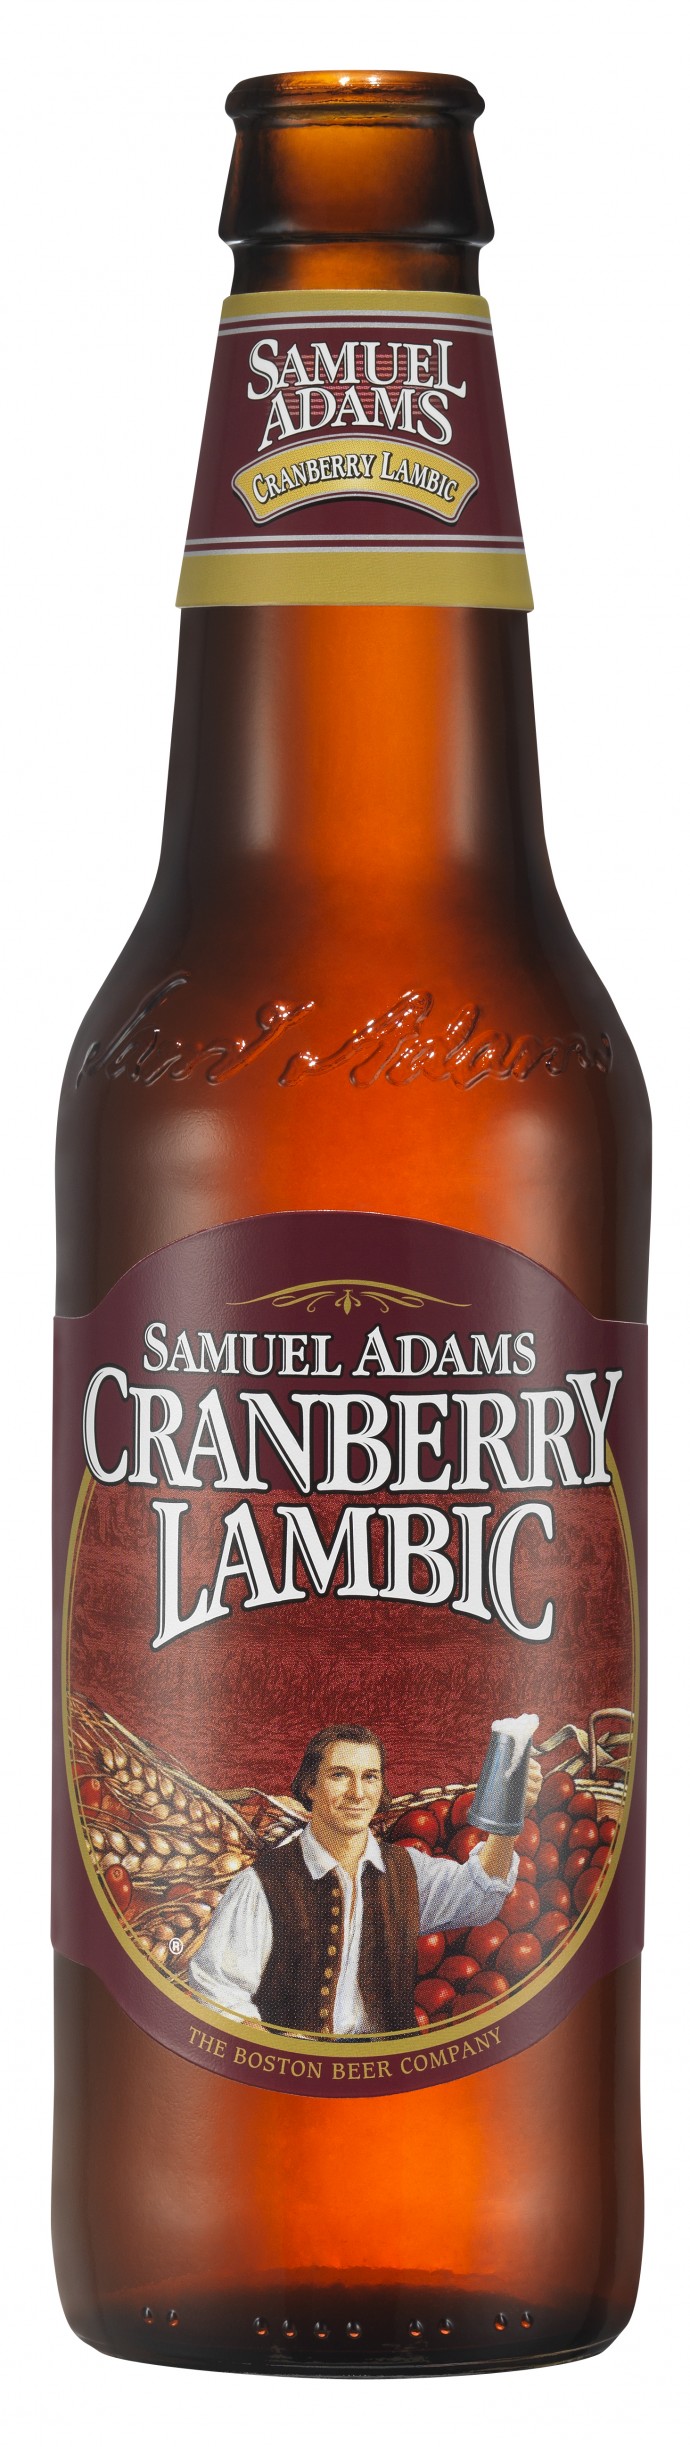 Sam adams cranberry lambic